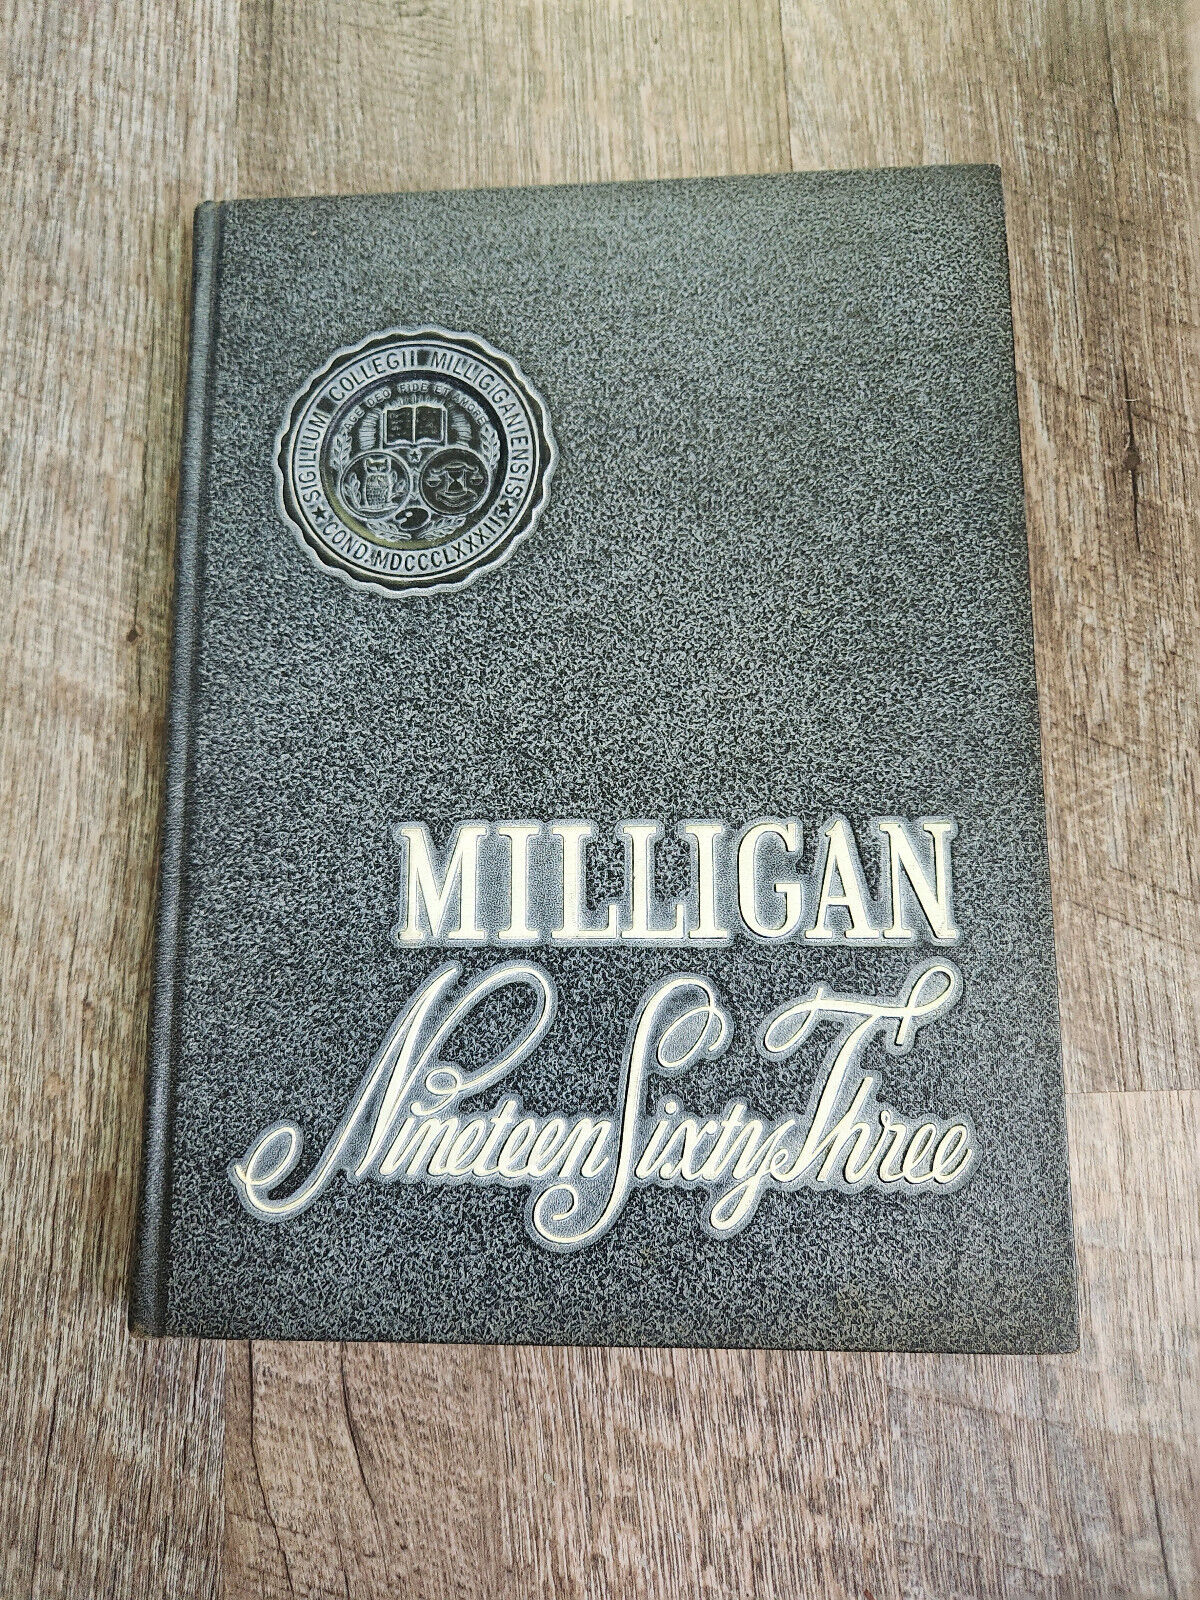 Milligan College Yearbook, 1963, HC